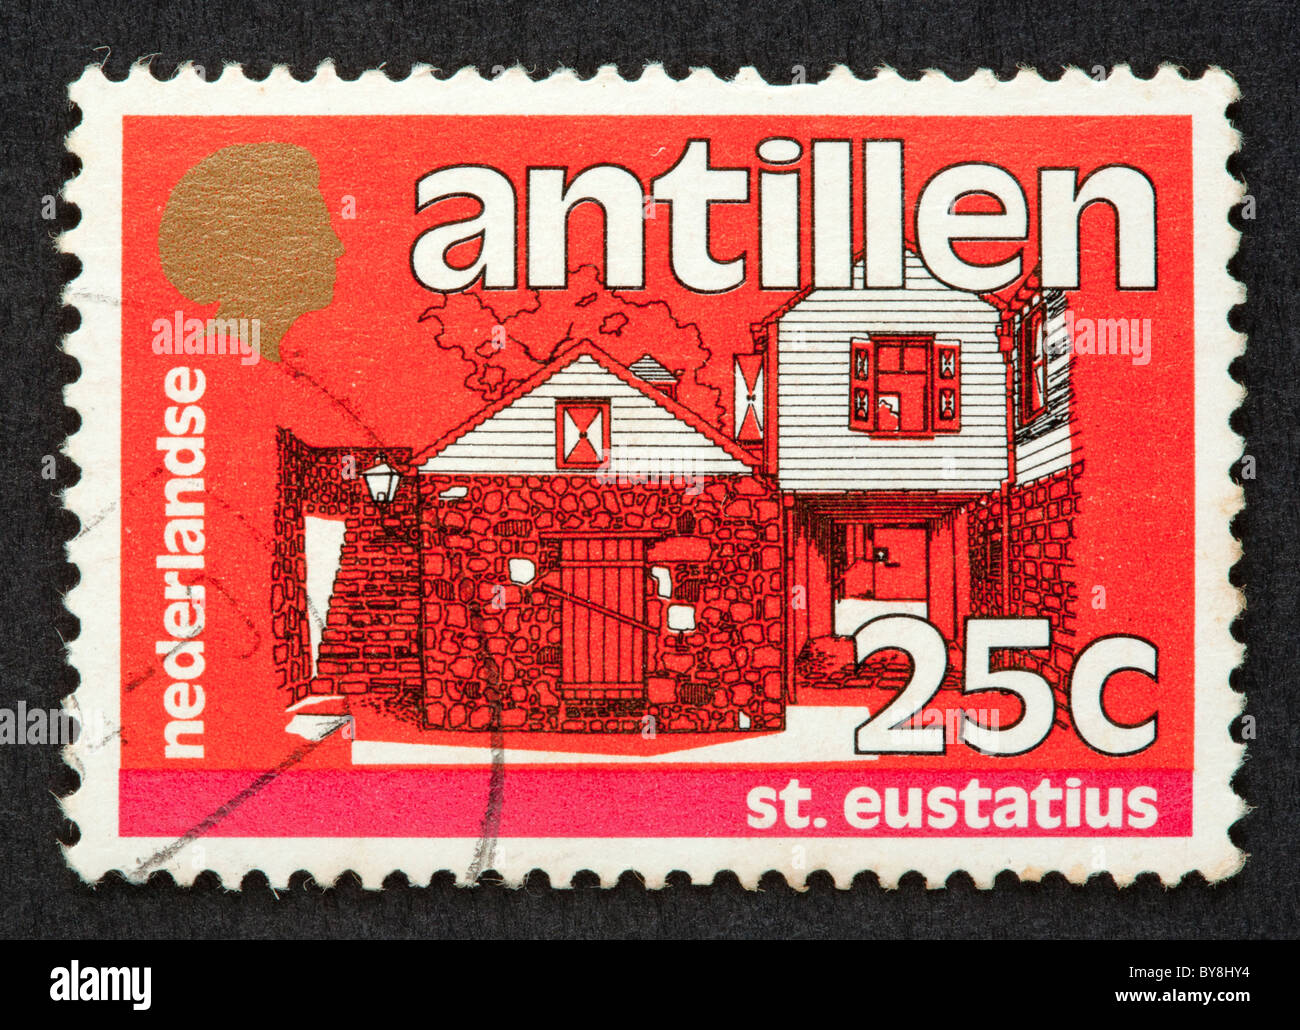 Netherlands Antilles postage stamp Stock Photo